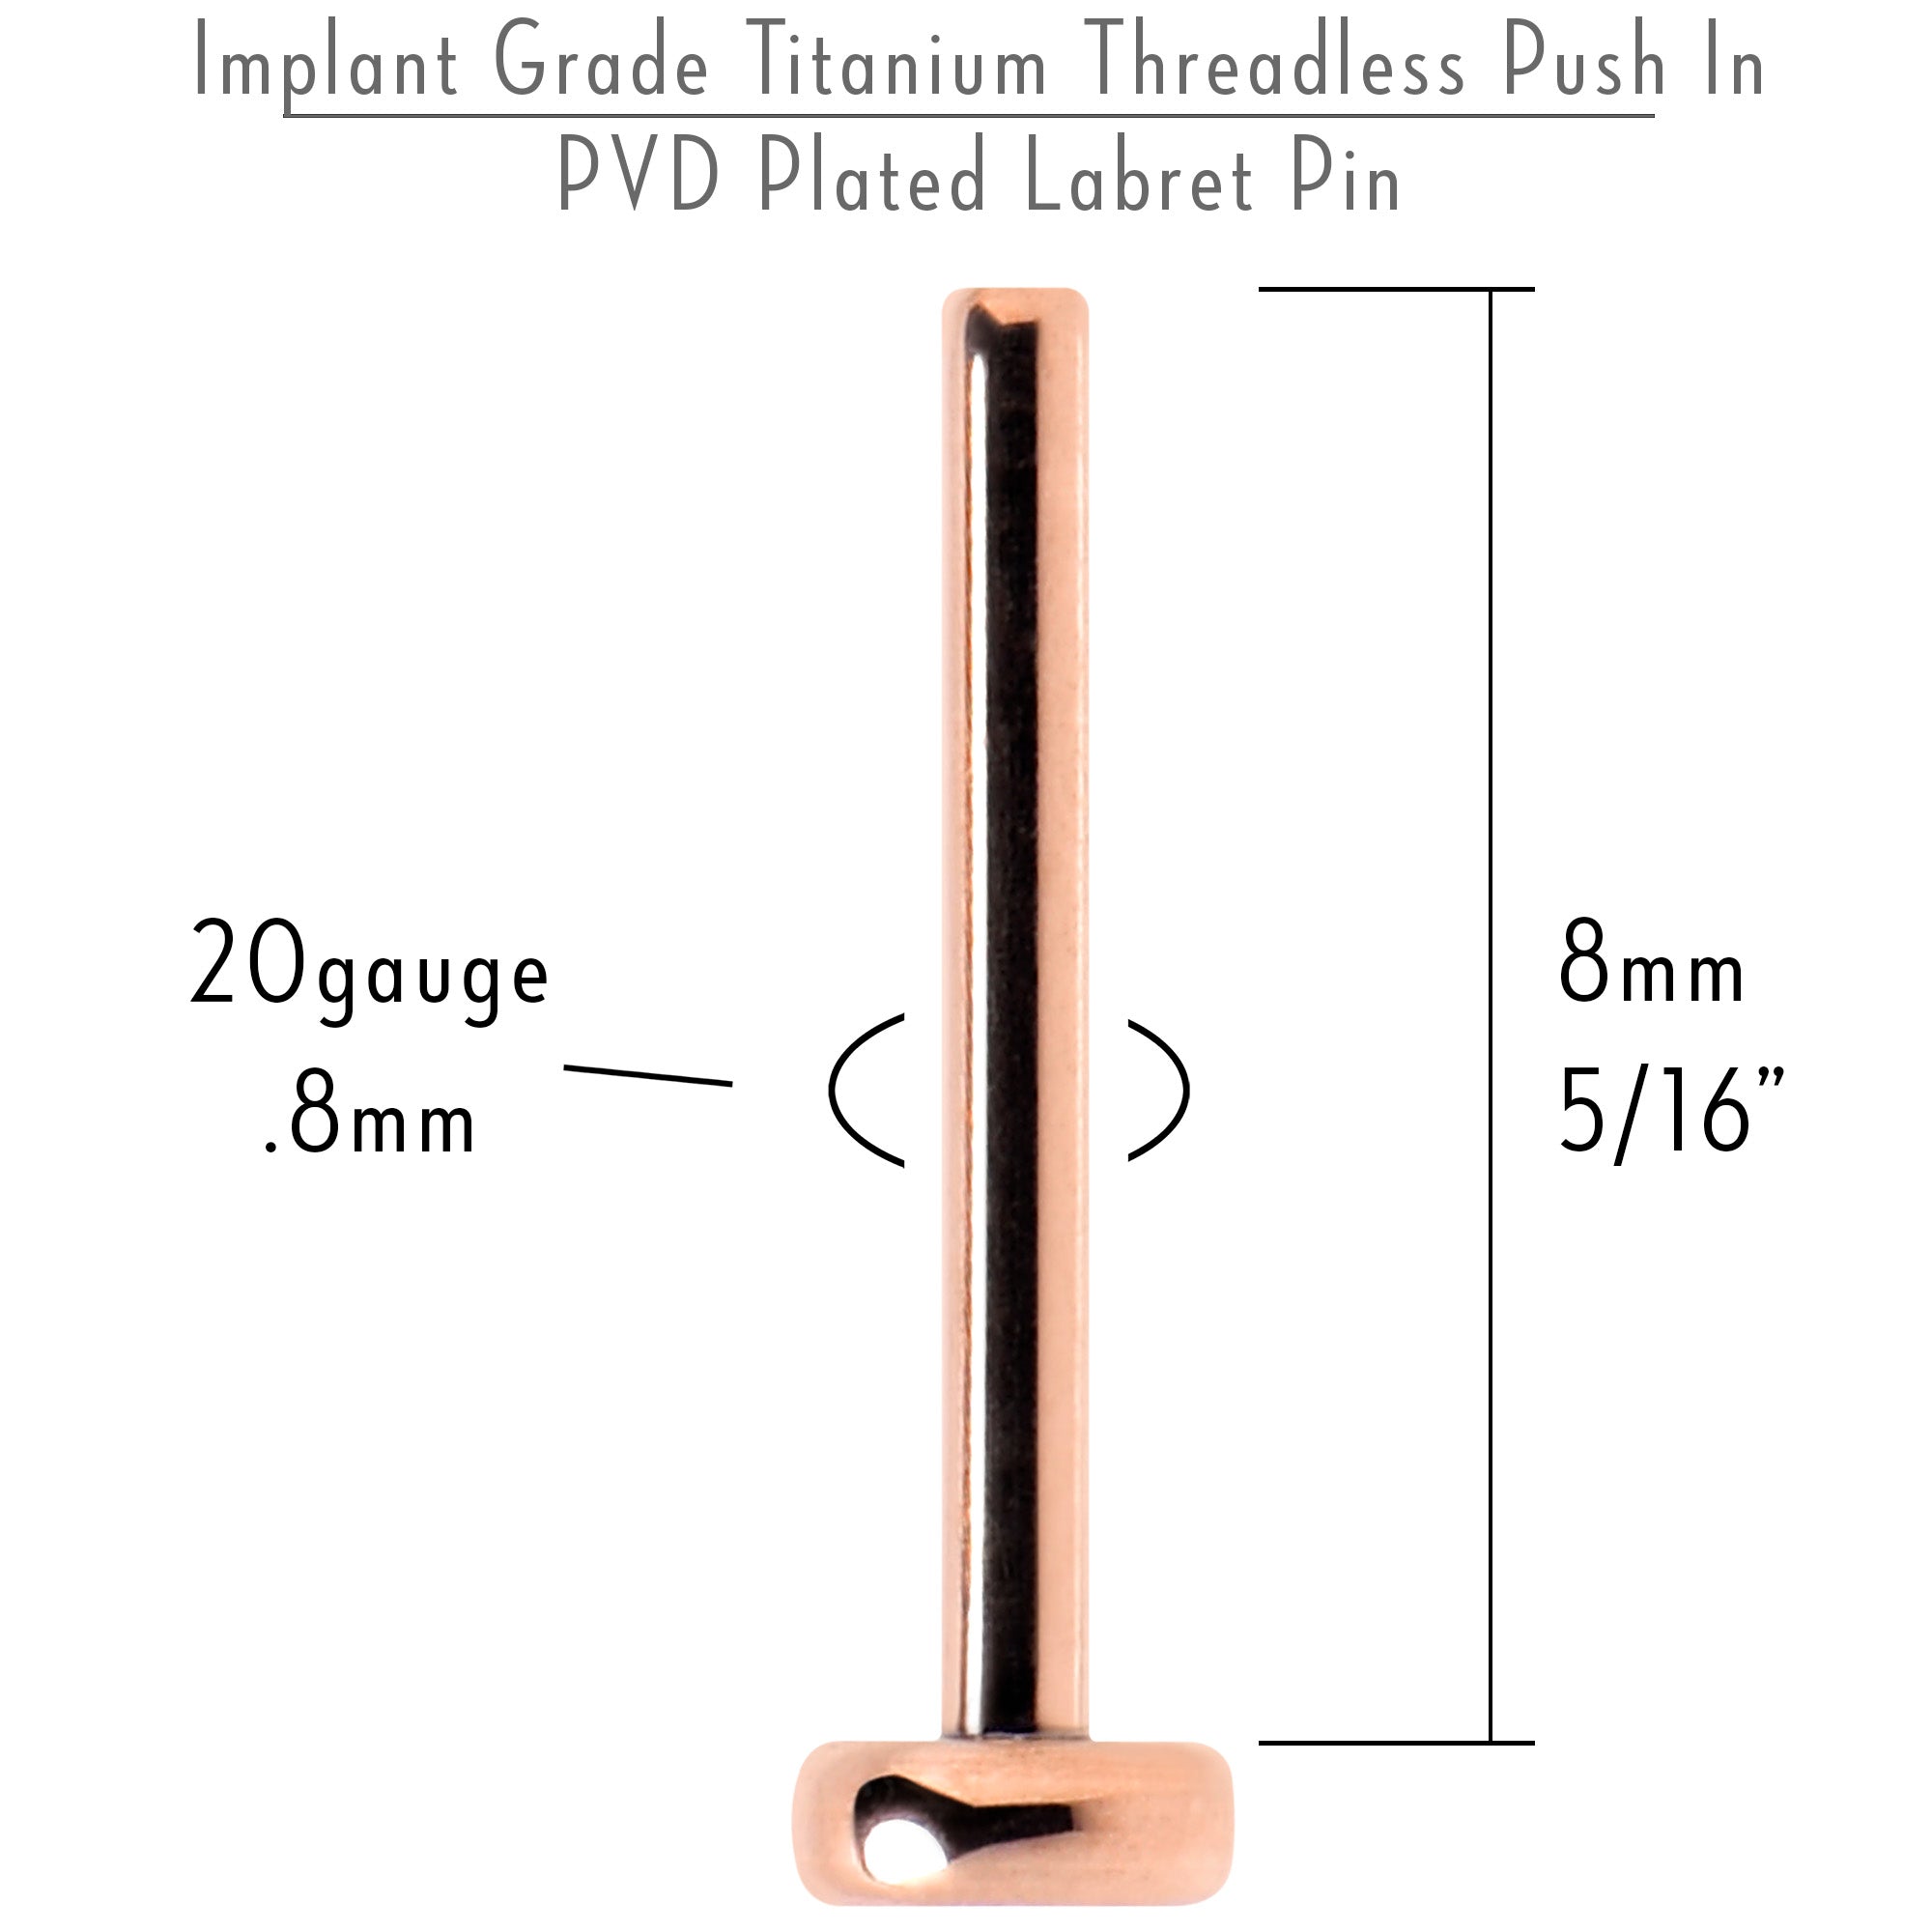 20 Gauge 5/16 Rosy Hue ASTM F-136 Implant Grade Titanium Threadless Post Only Labret